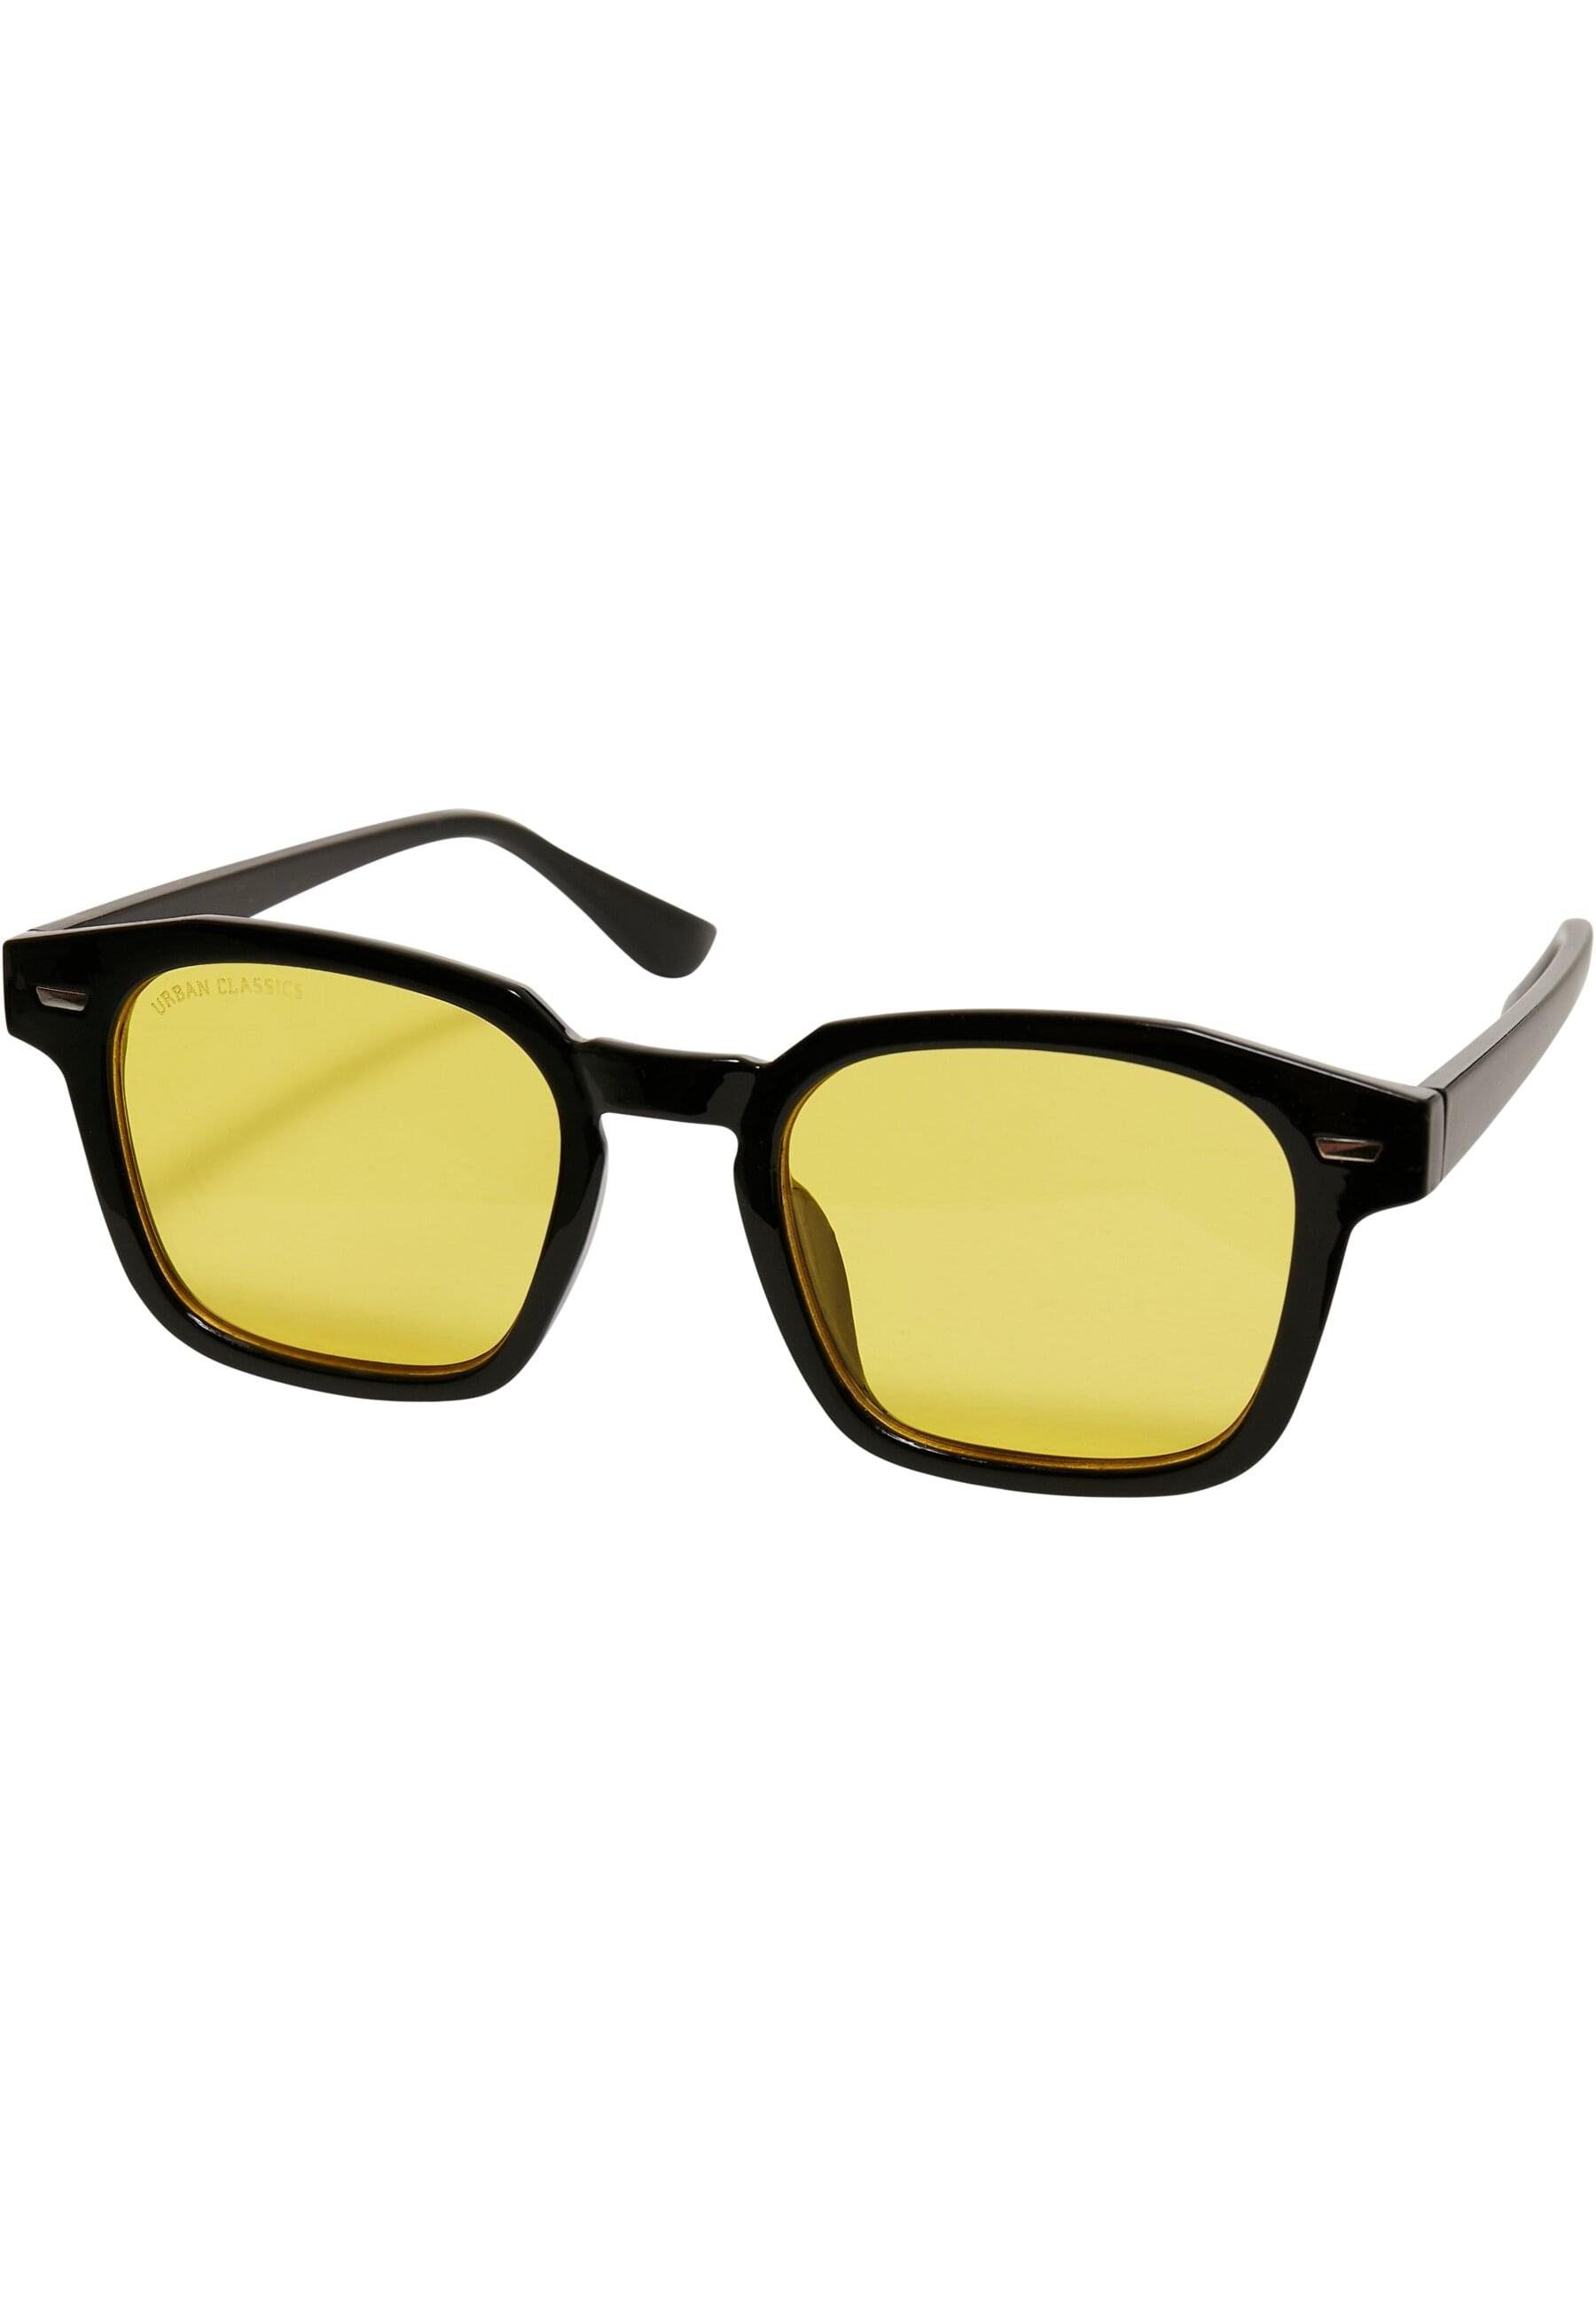 Sonnenbrille Unisex Sunglasses With CLASSICS URBAN Case Maui black/yellow